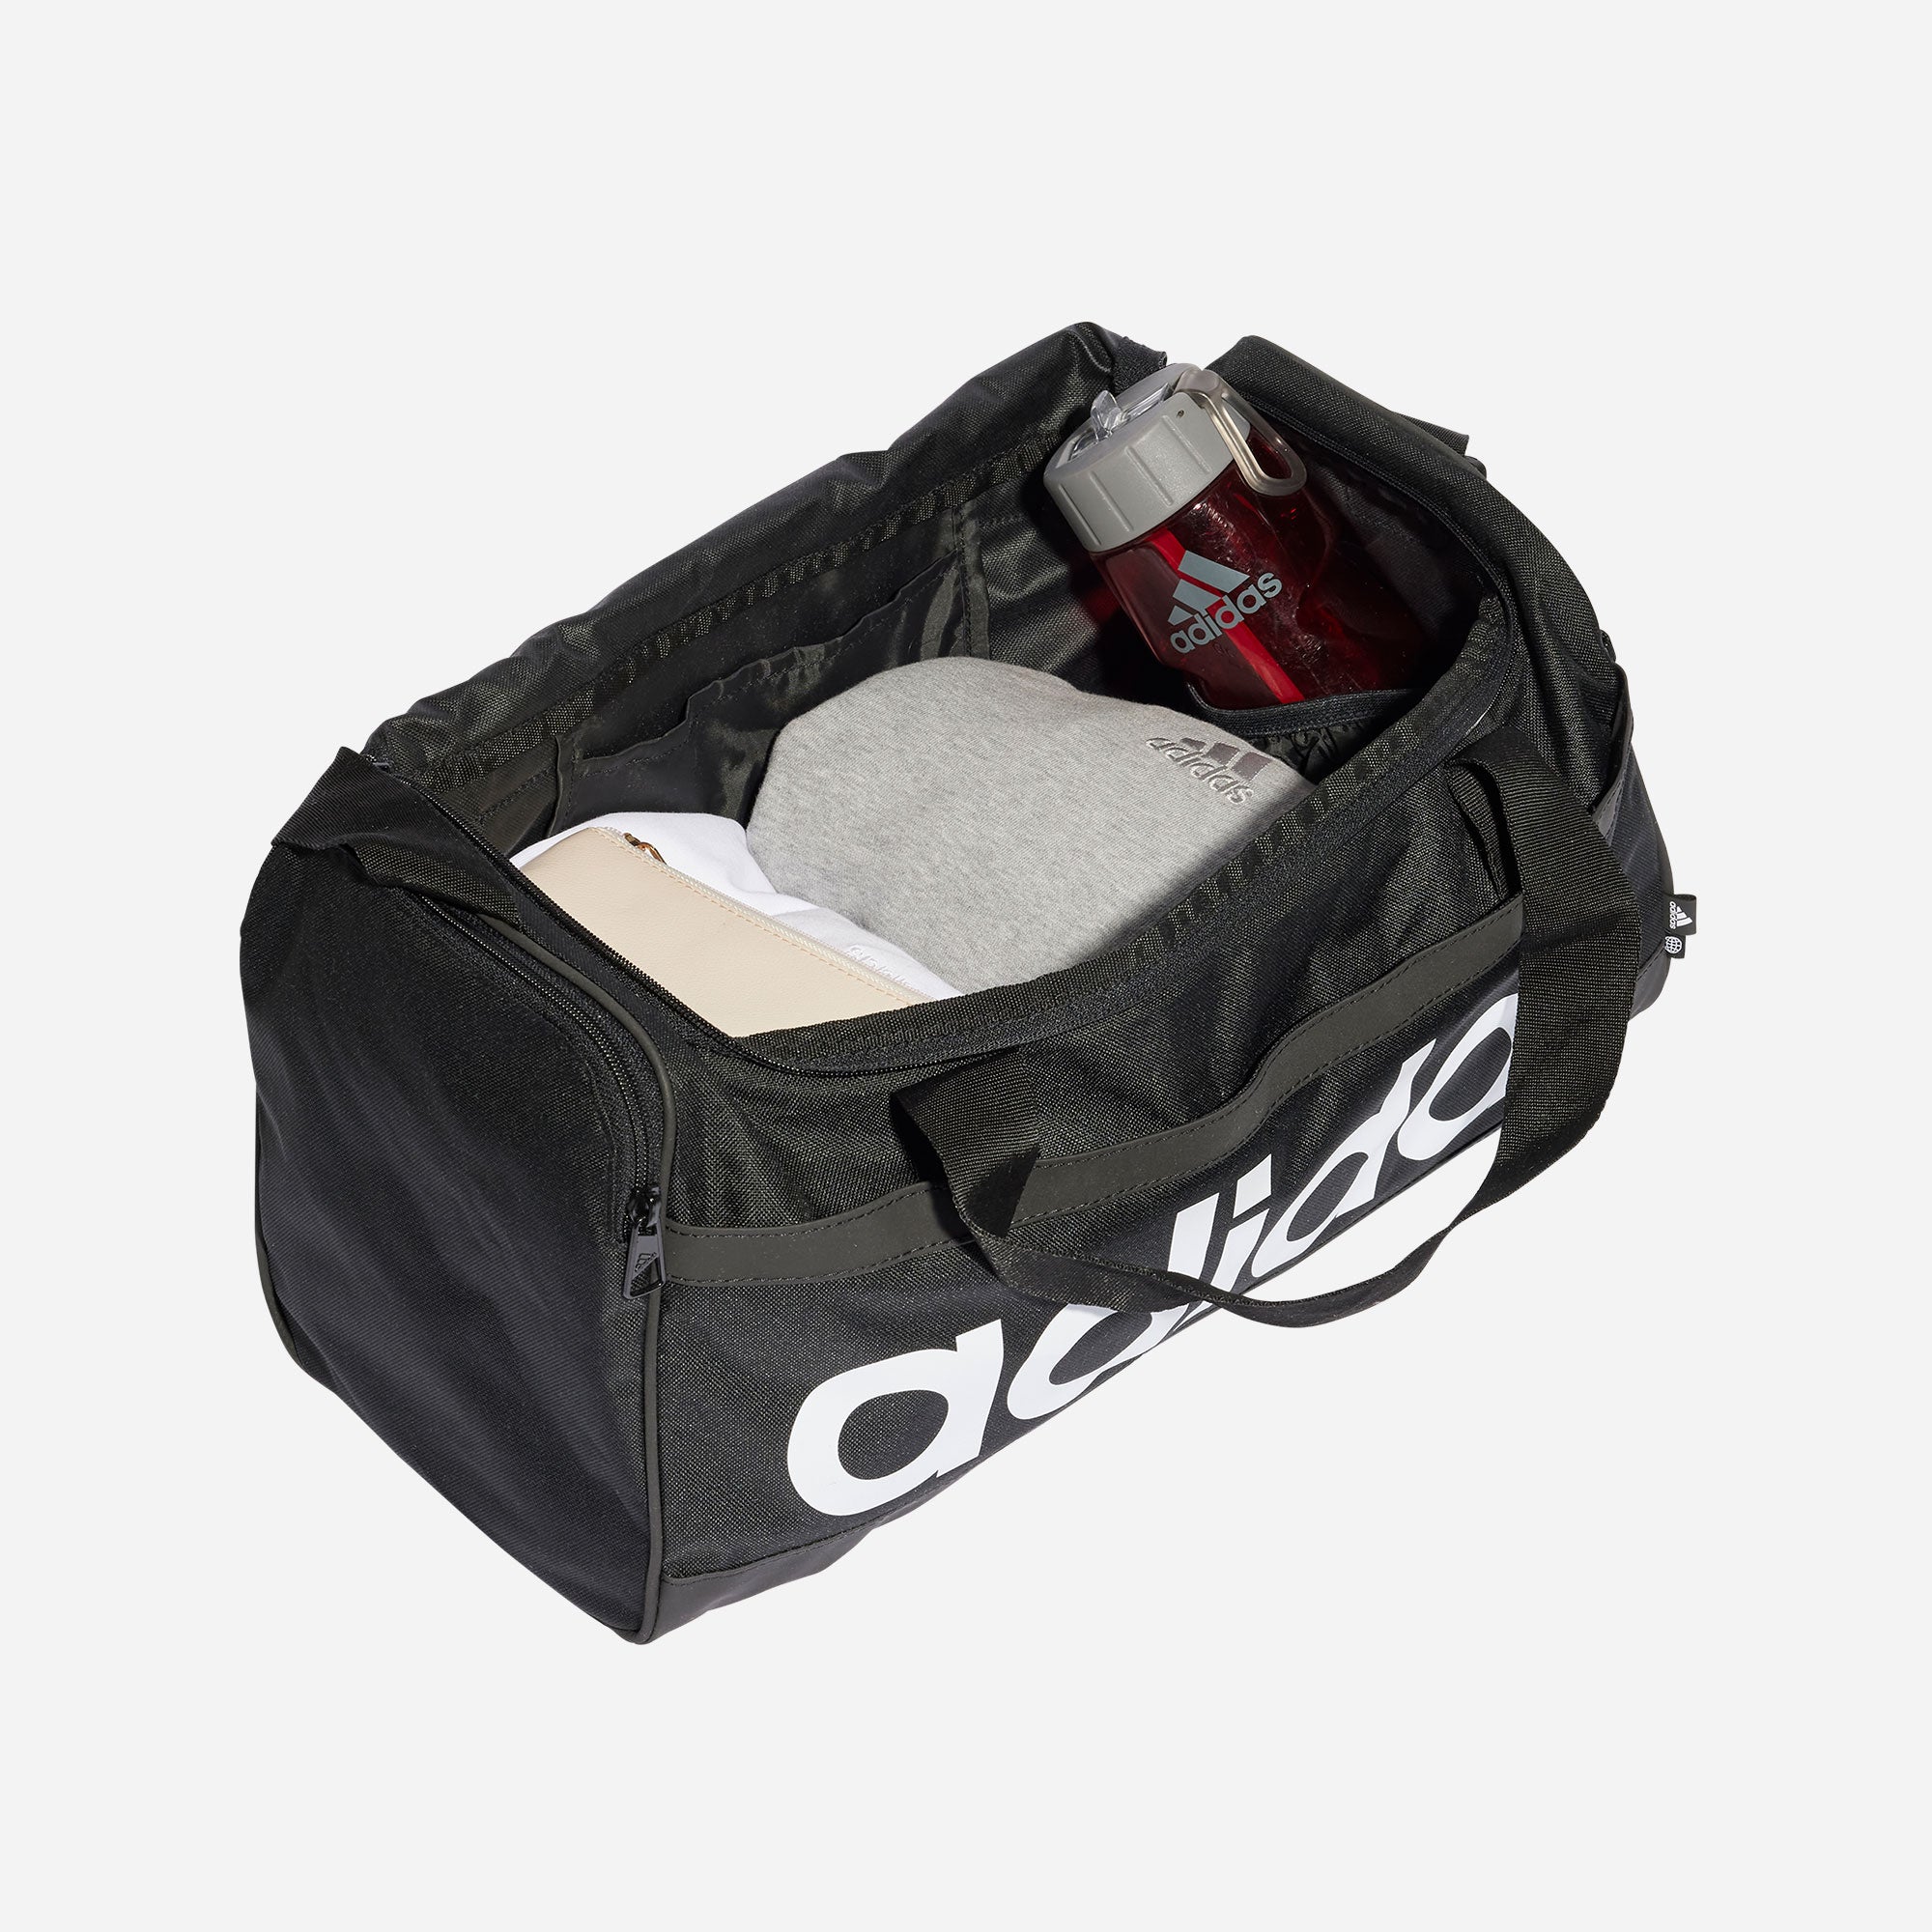 Túi Adidas Linear Duffel Bags - Supersports Vietnam